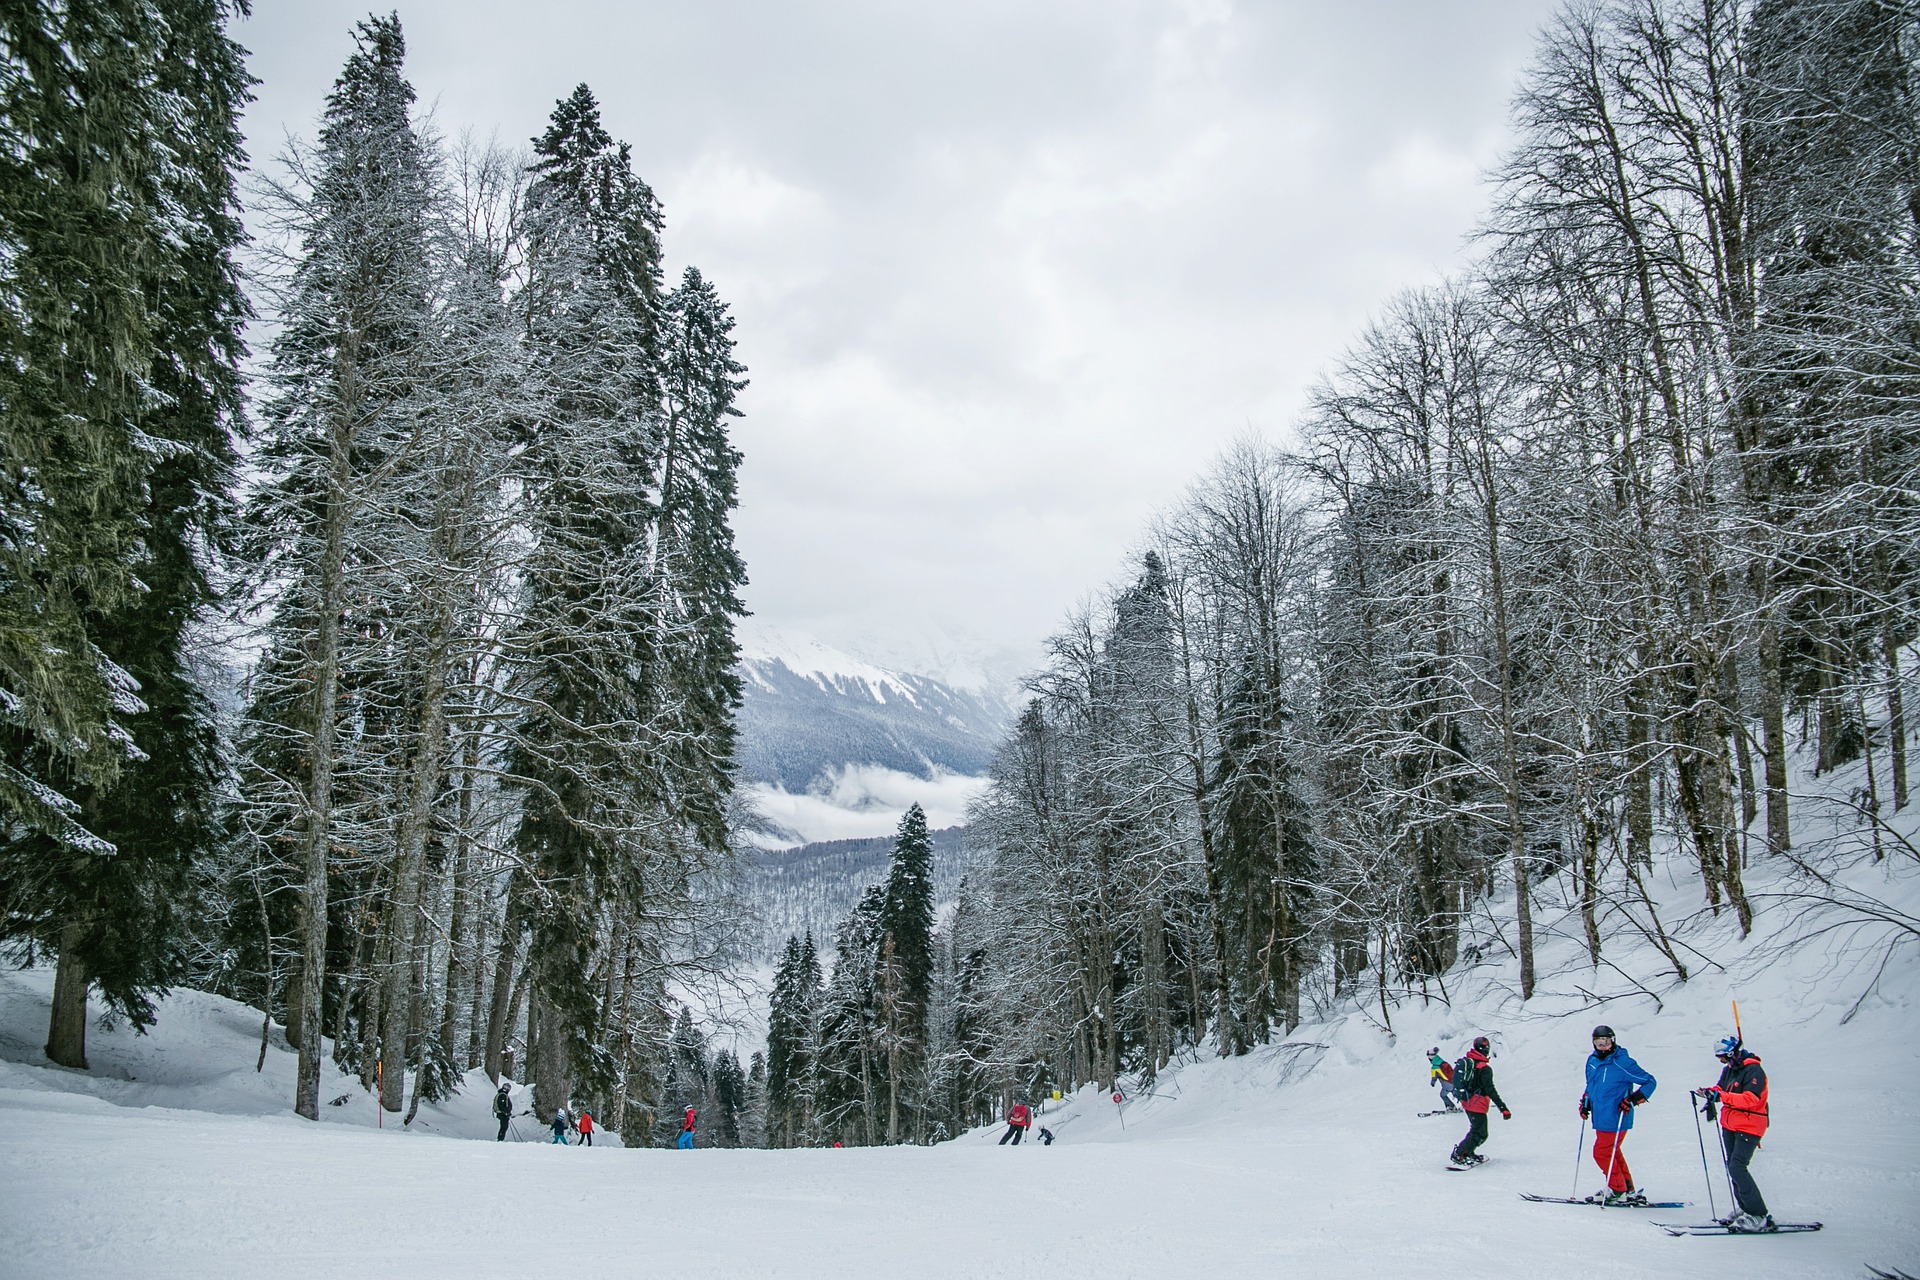 Enjoy a winter park ski vacation